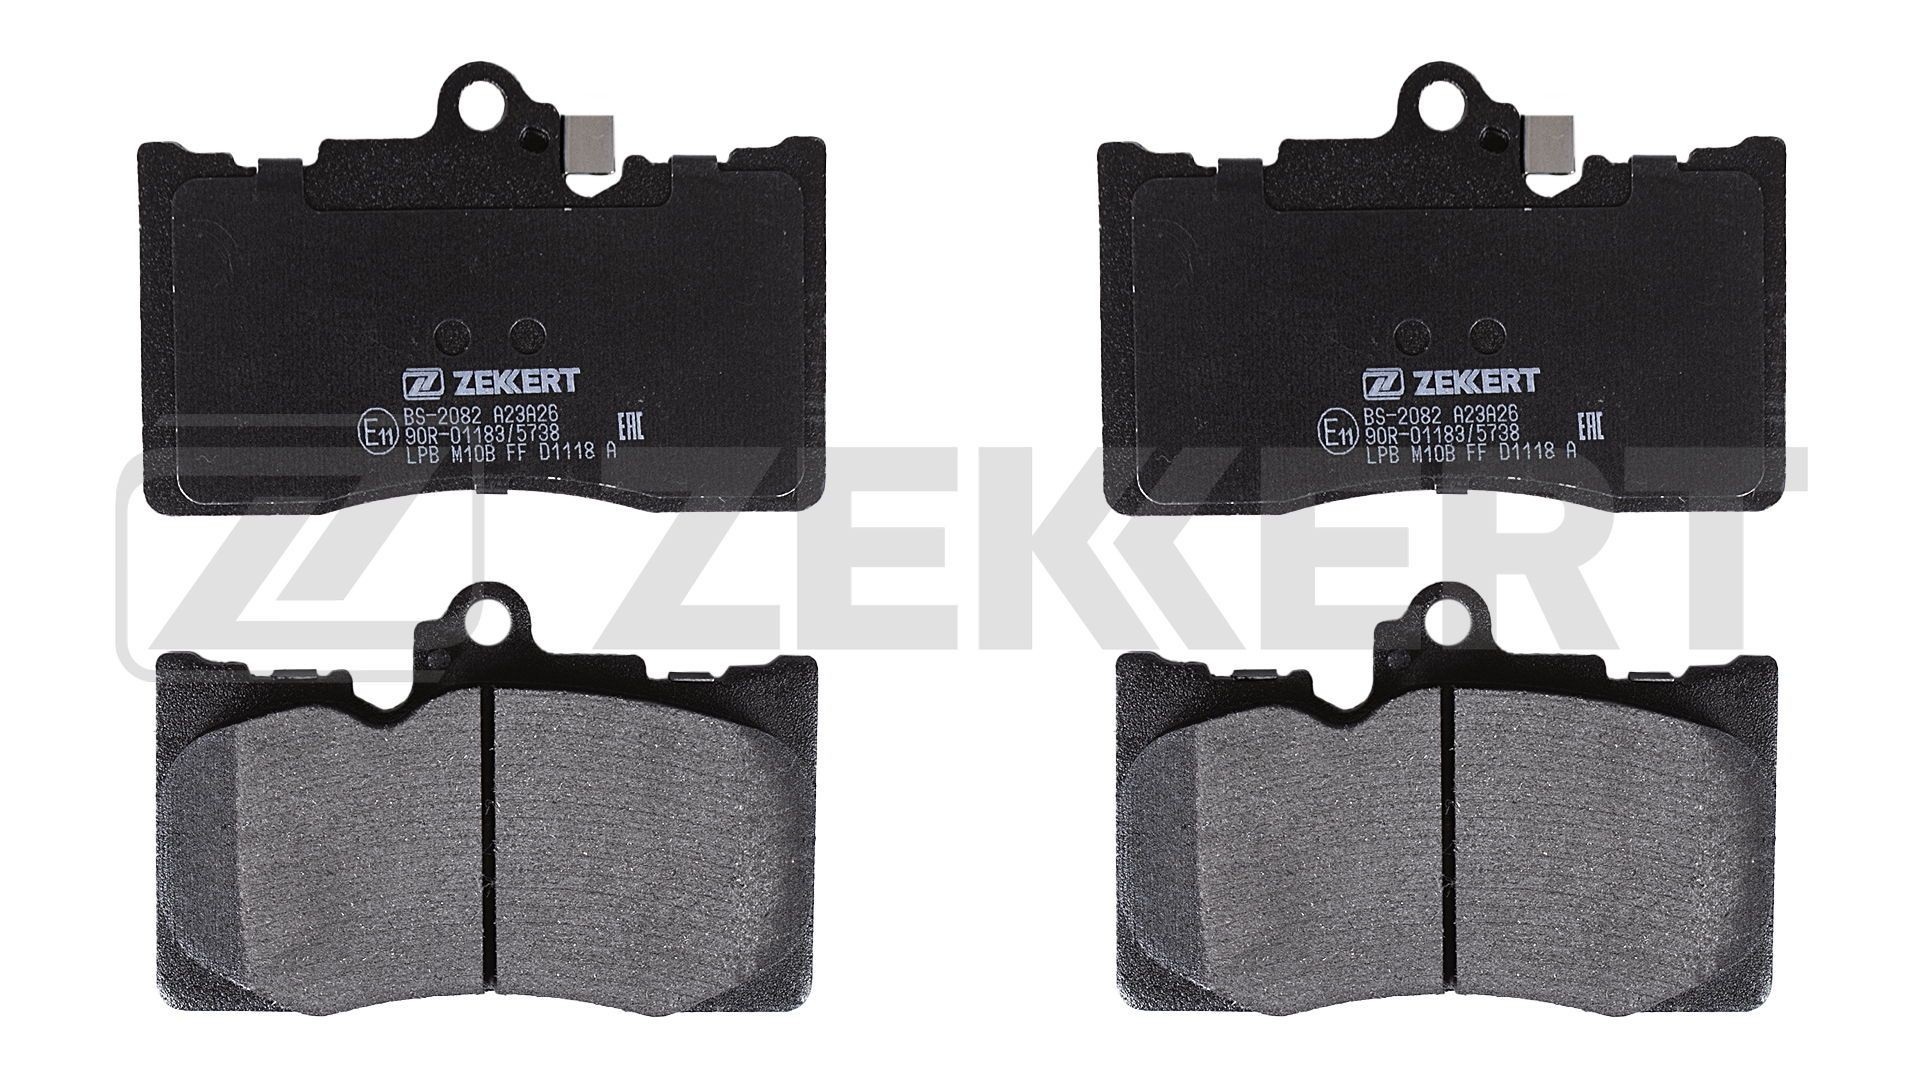 Original BS-2082 ZEKKERT Brake pads experience and price